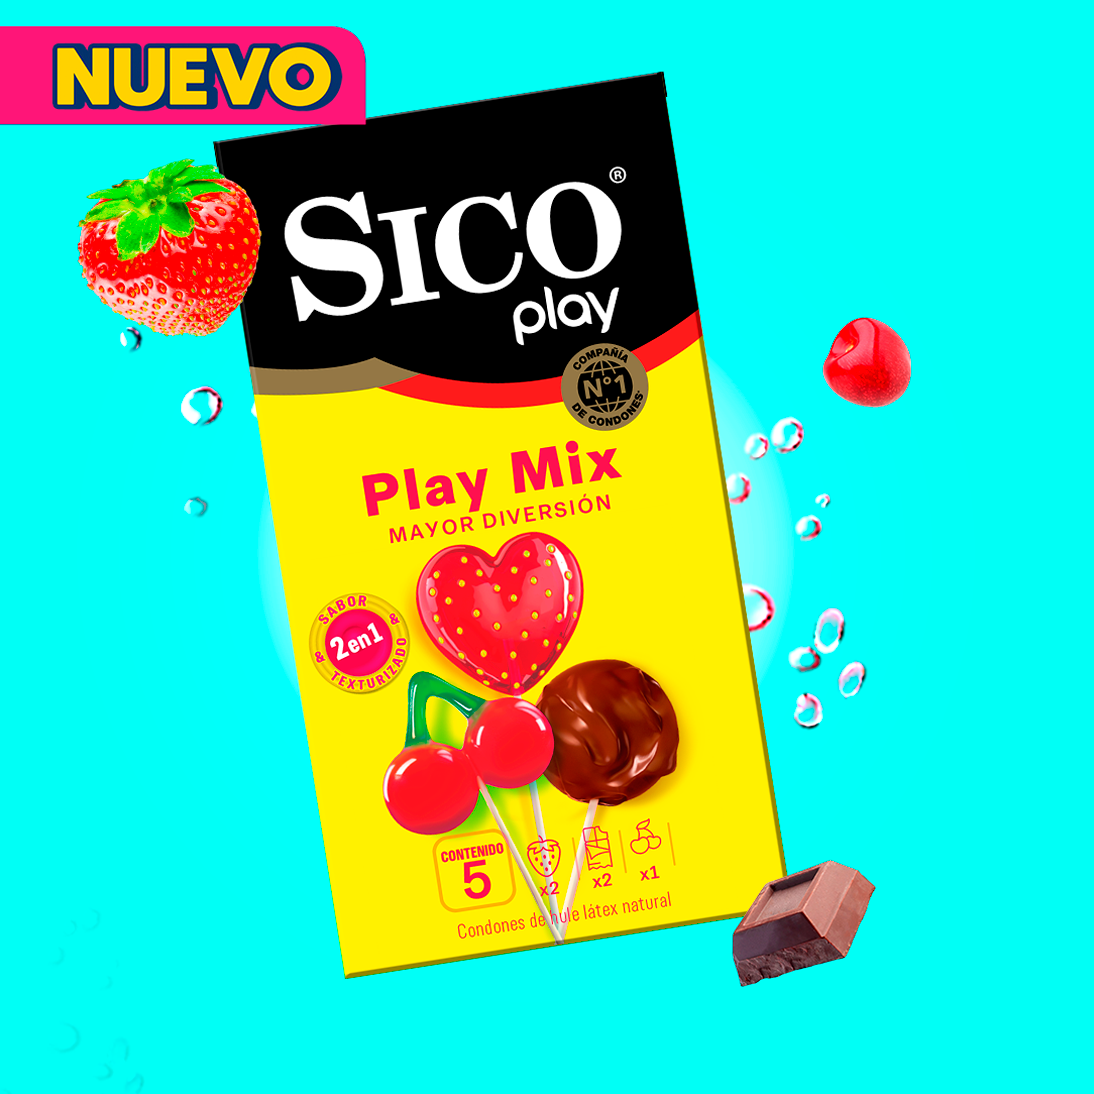 Sico Play Mix